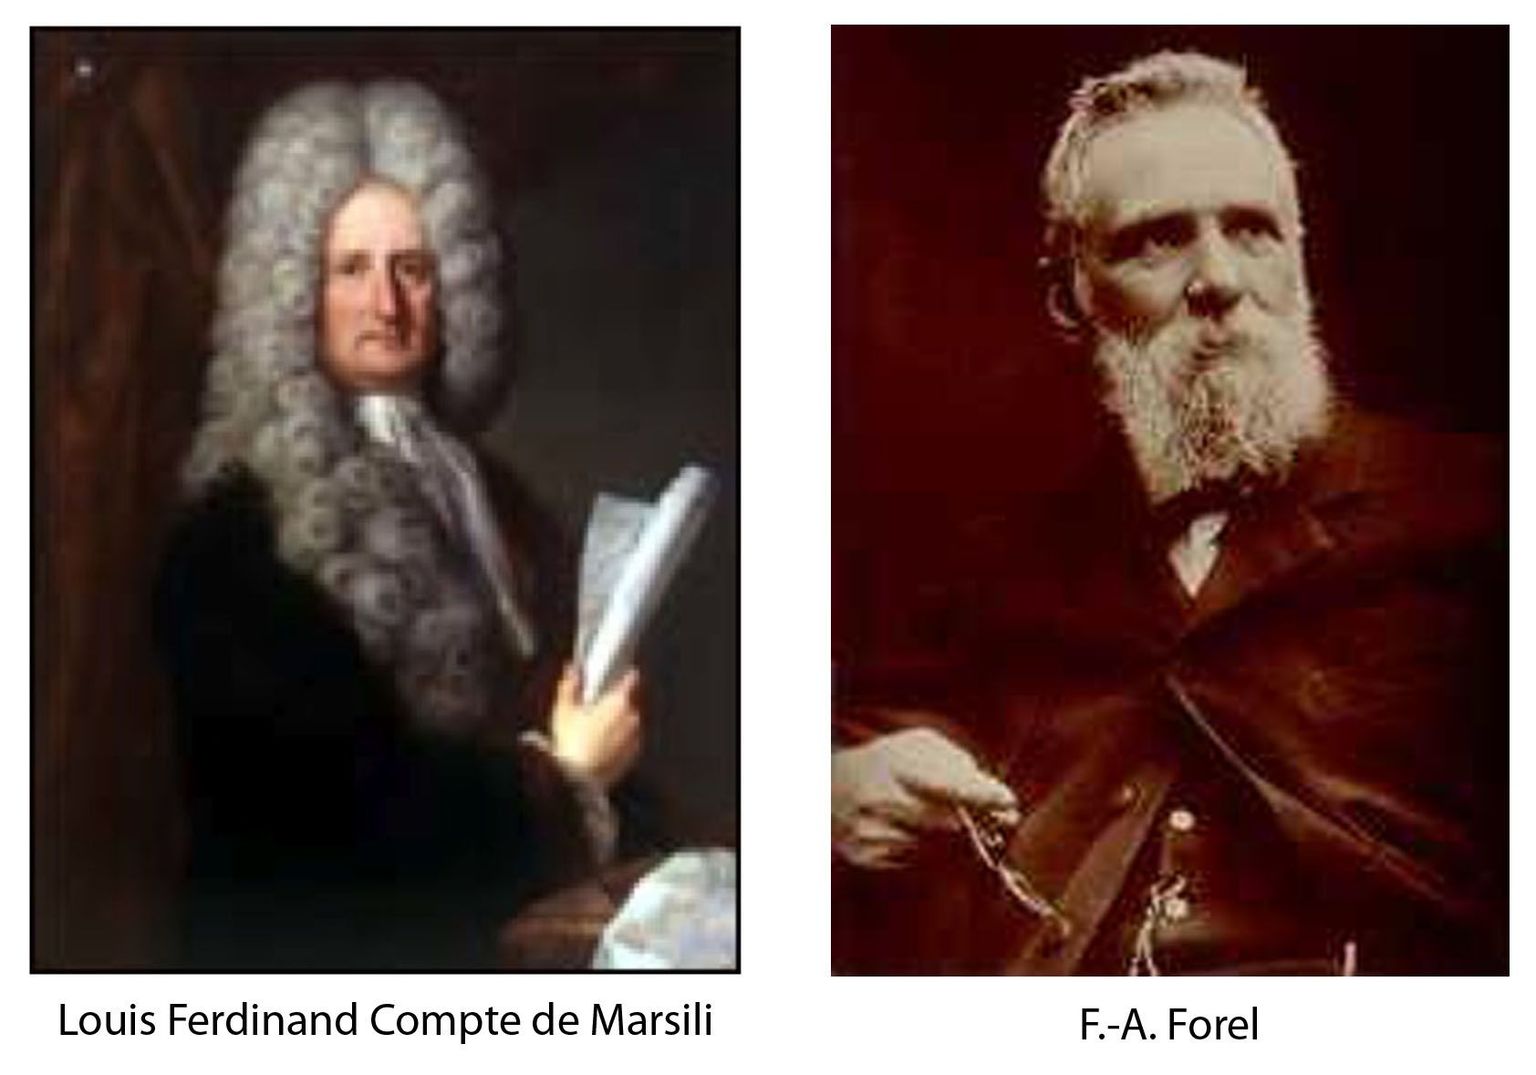 Ferdinand et Forel